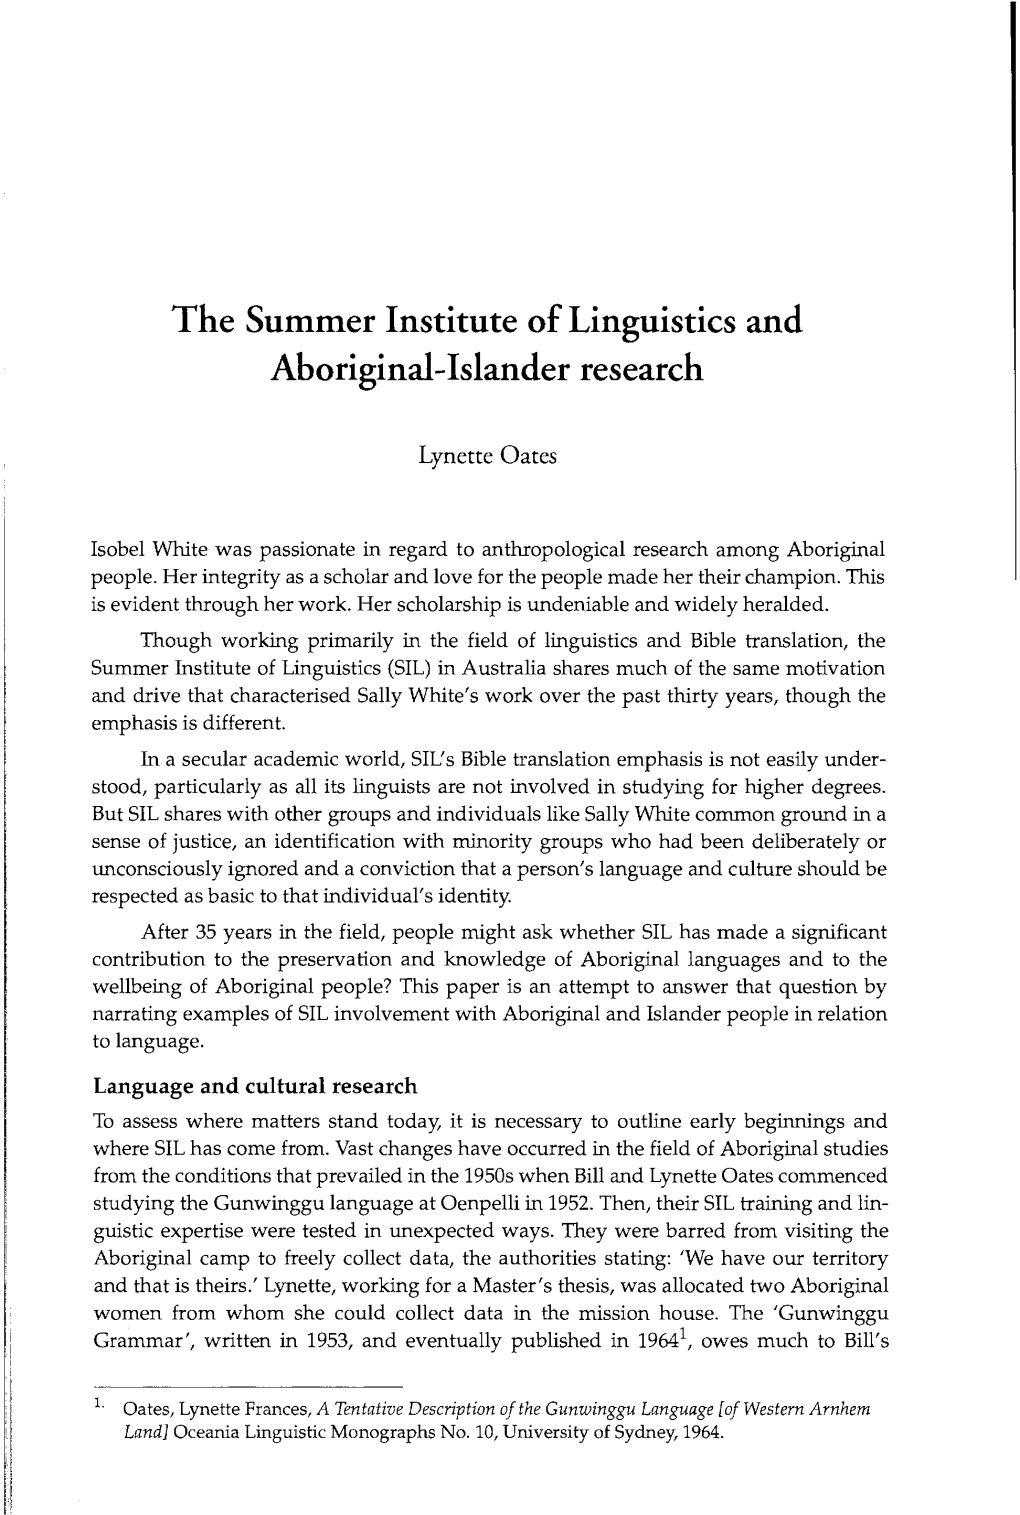 The Summer Institute of Linguistics and Aboriginal-Islander Research